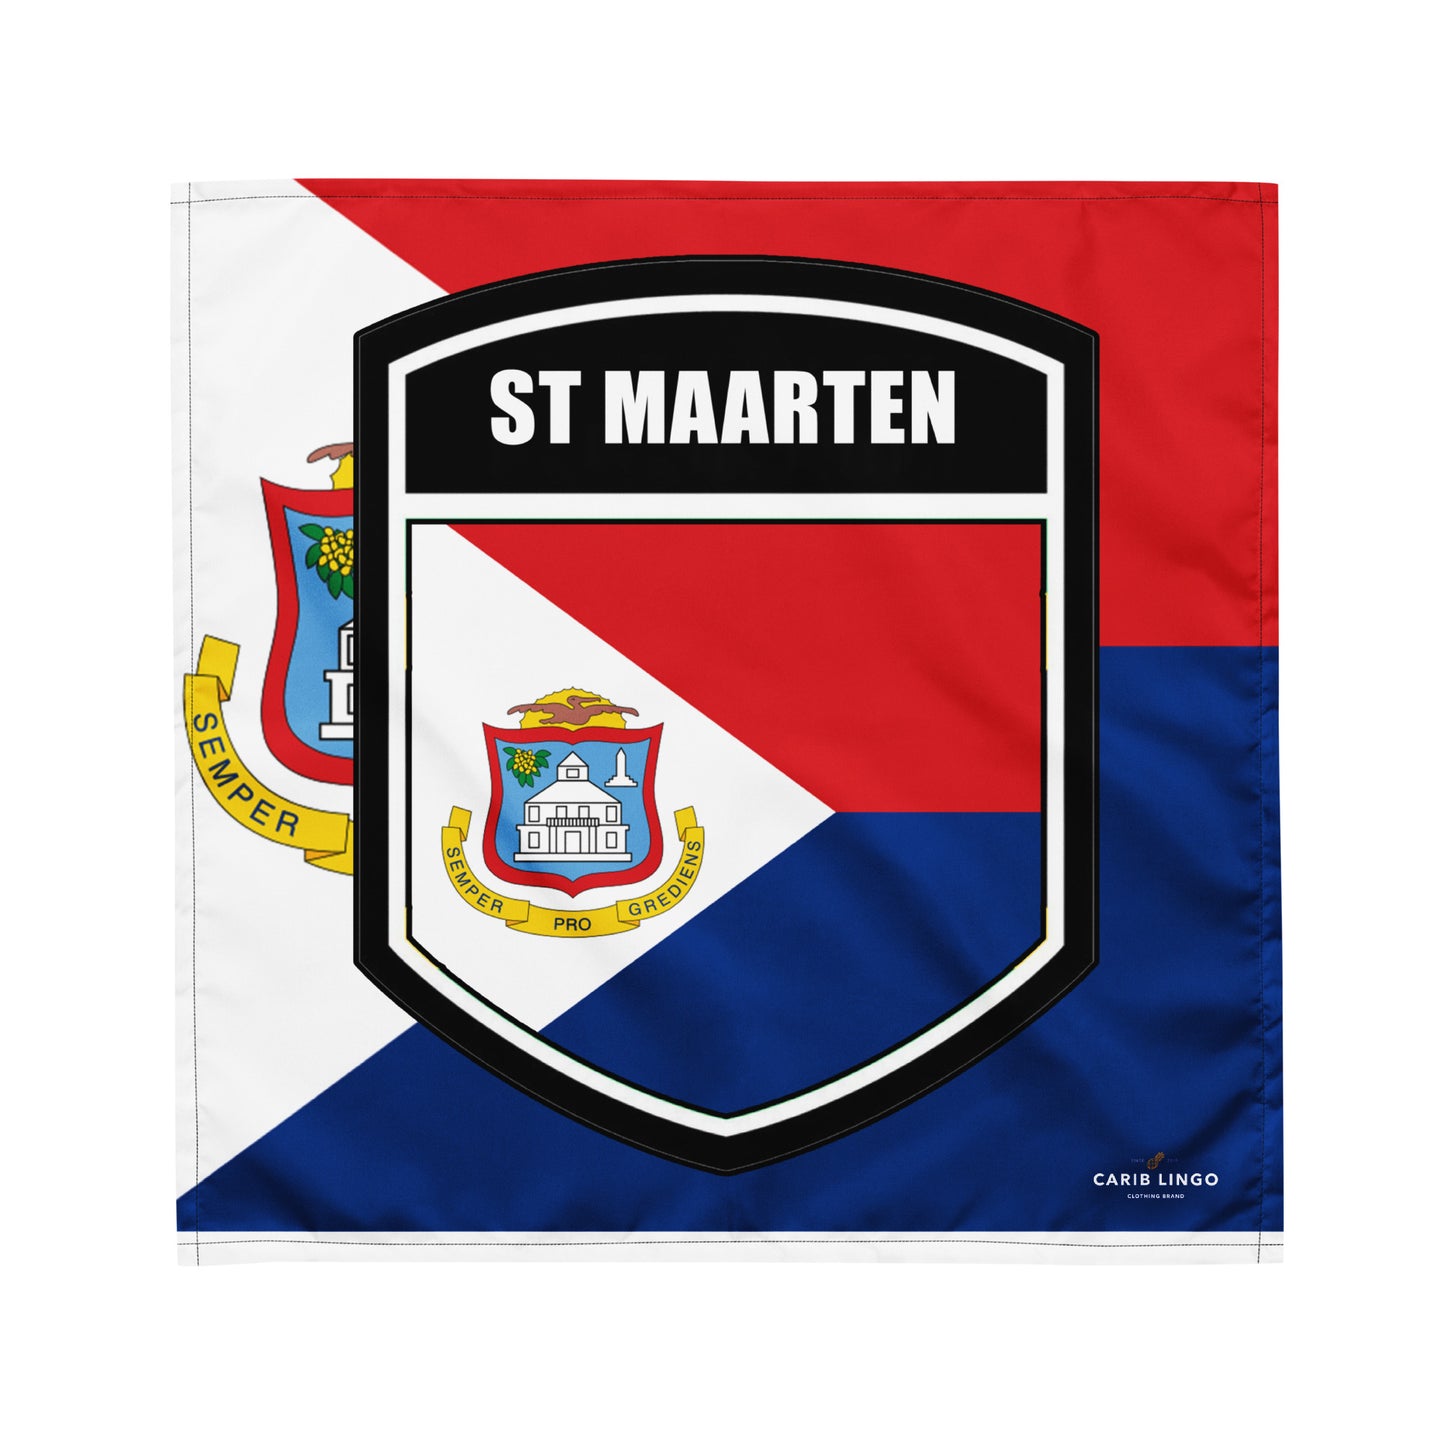 St. Maarten bandana